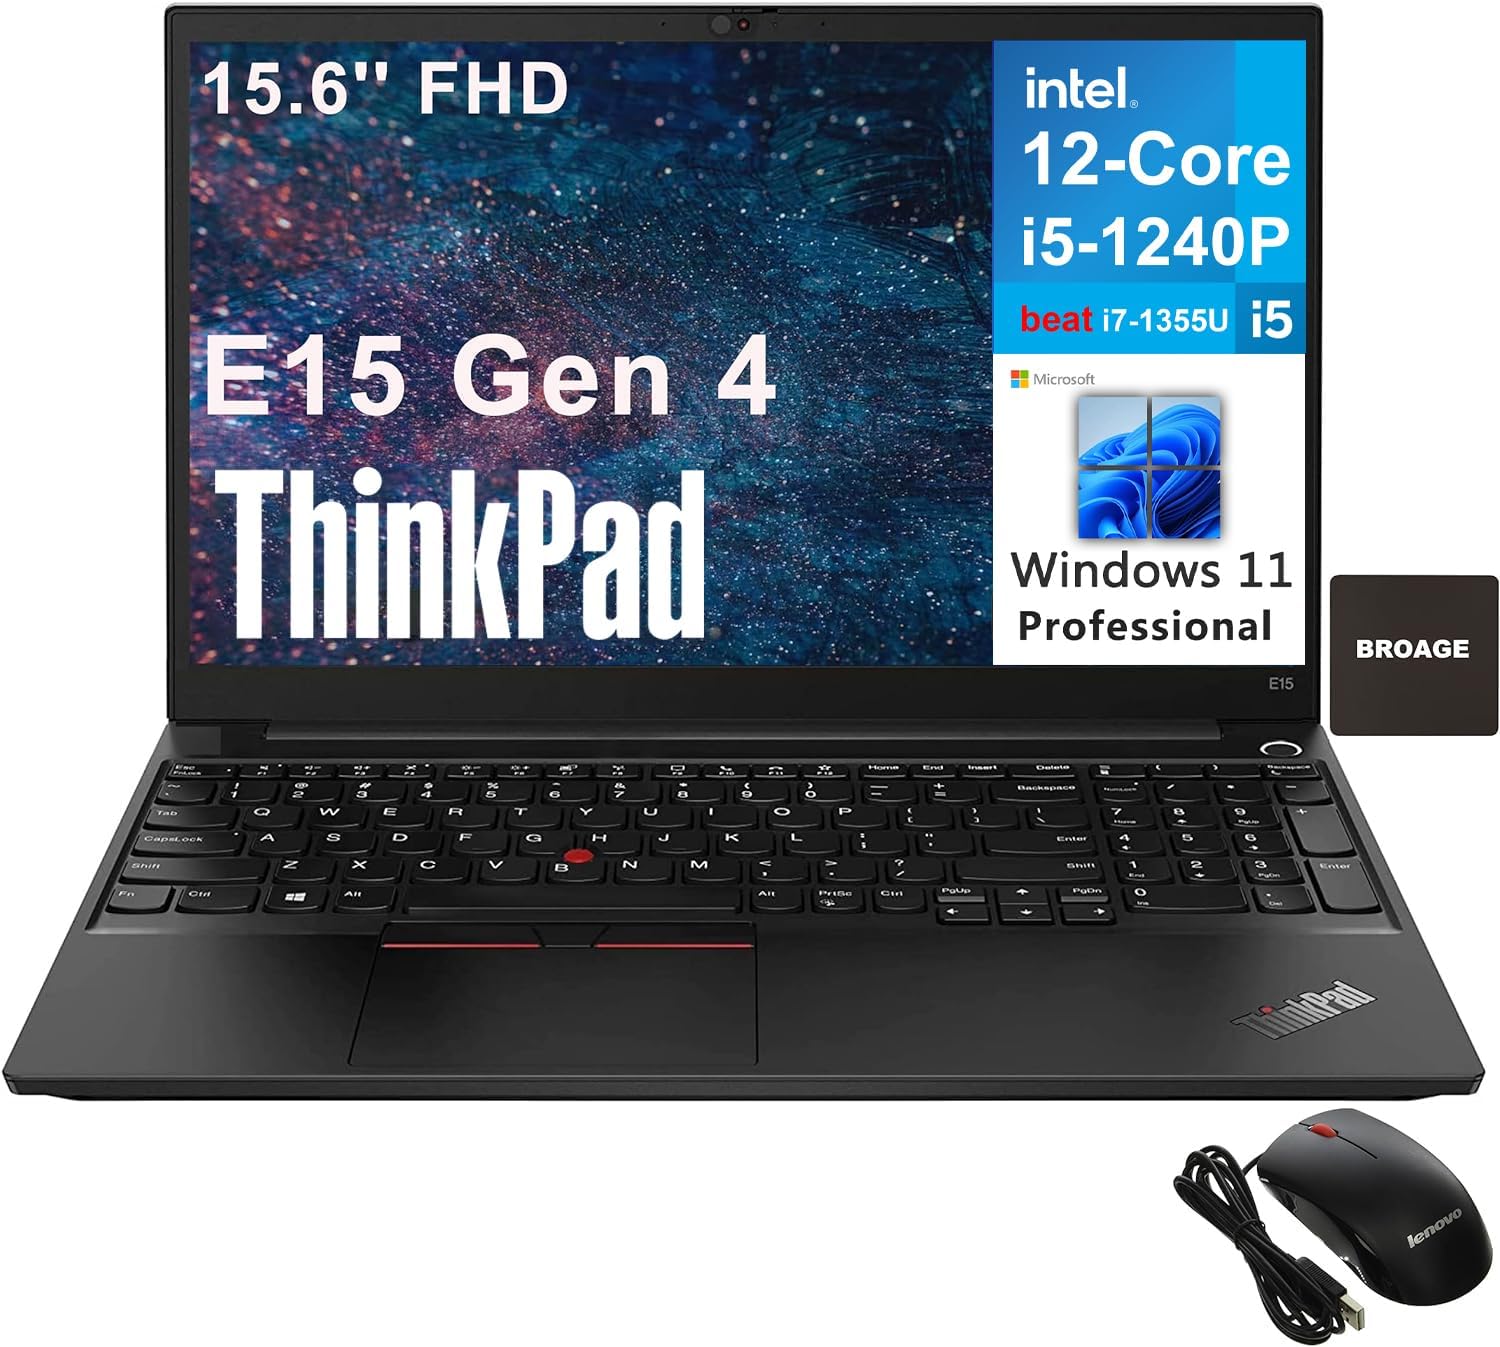 Lenovo ThinkPad E15 Gen 4 15.6" FHD Business Laptop Computer, 12th Gen Intel 12-Core i5-1240P (Beat i7-1355U), 16GB DDR4 RAM, 512GB PCIe SSD, WiFi 6, Bluetooth 5.1, Black, Windows 11 Pro, AZ-XUT